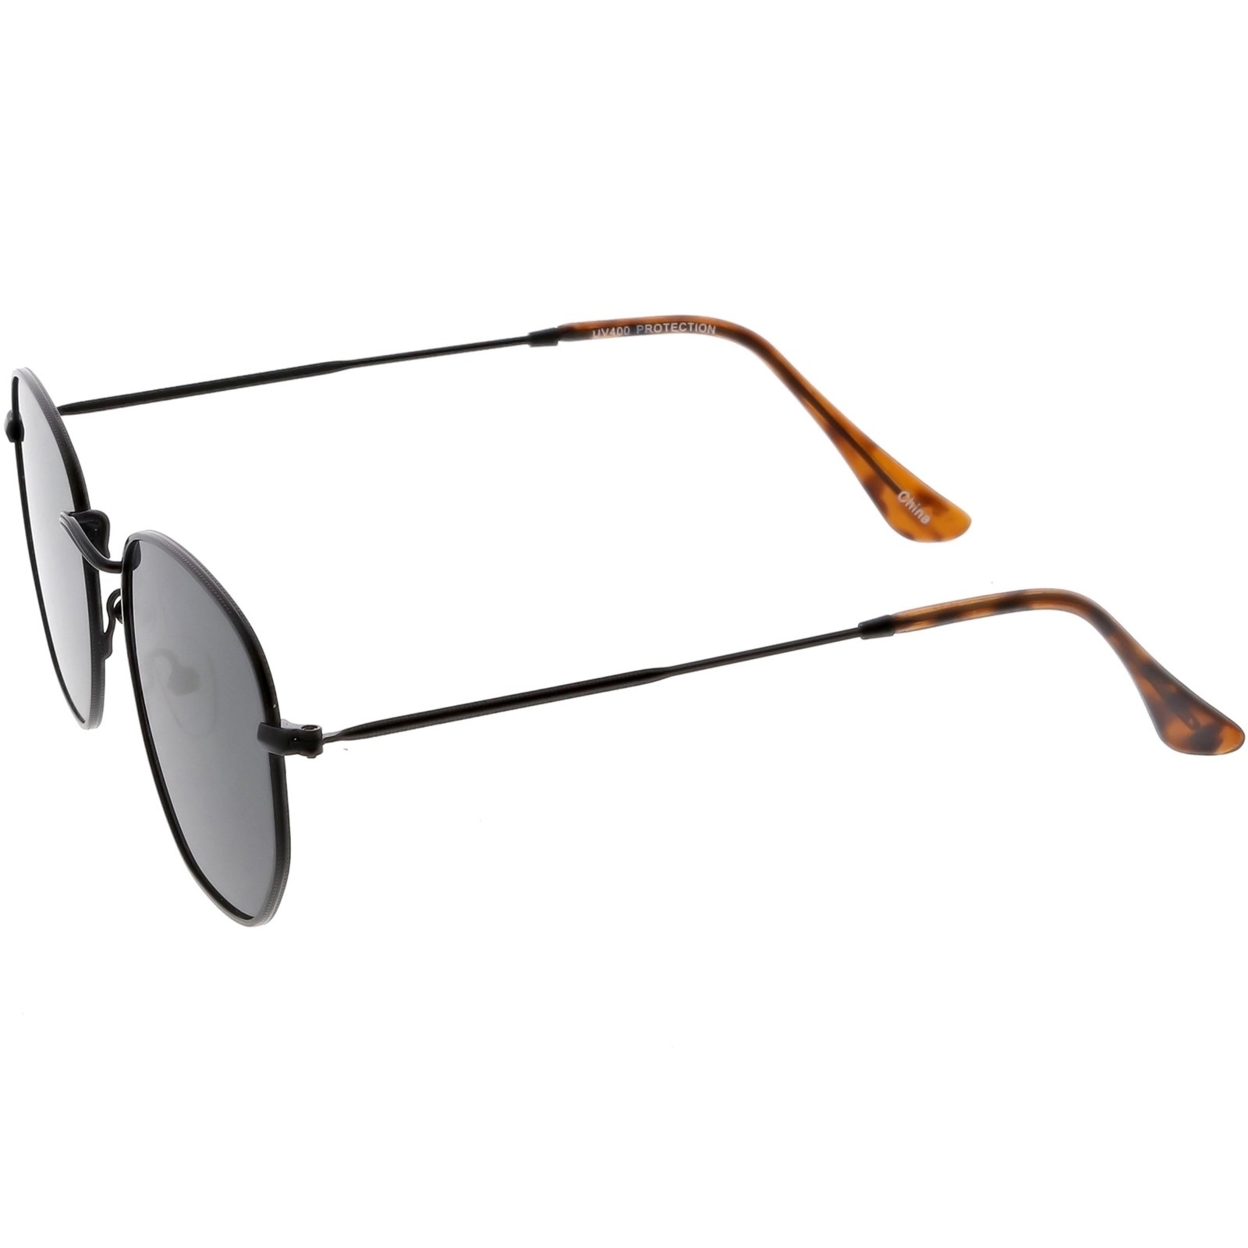 Modern Hexagonal Sunglasses Slim Metal Arms Neutral Colored Flat Lens 51mm - Black / Smoke